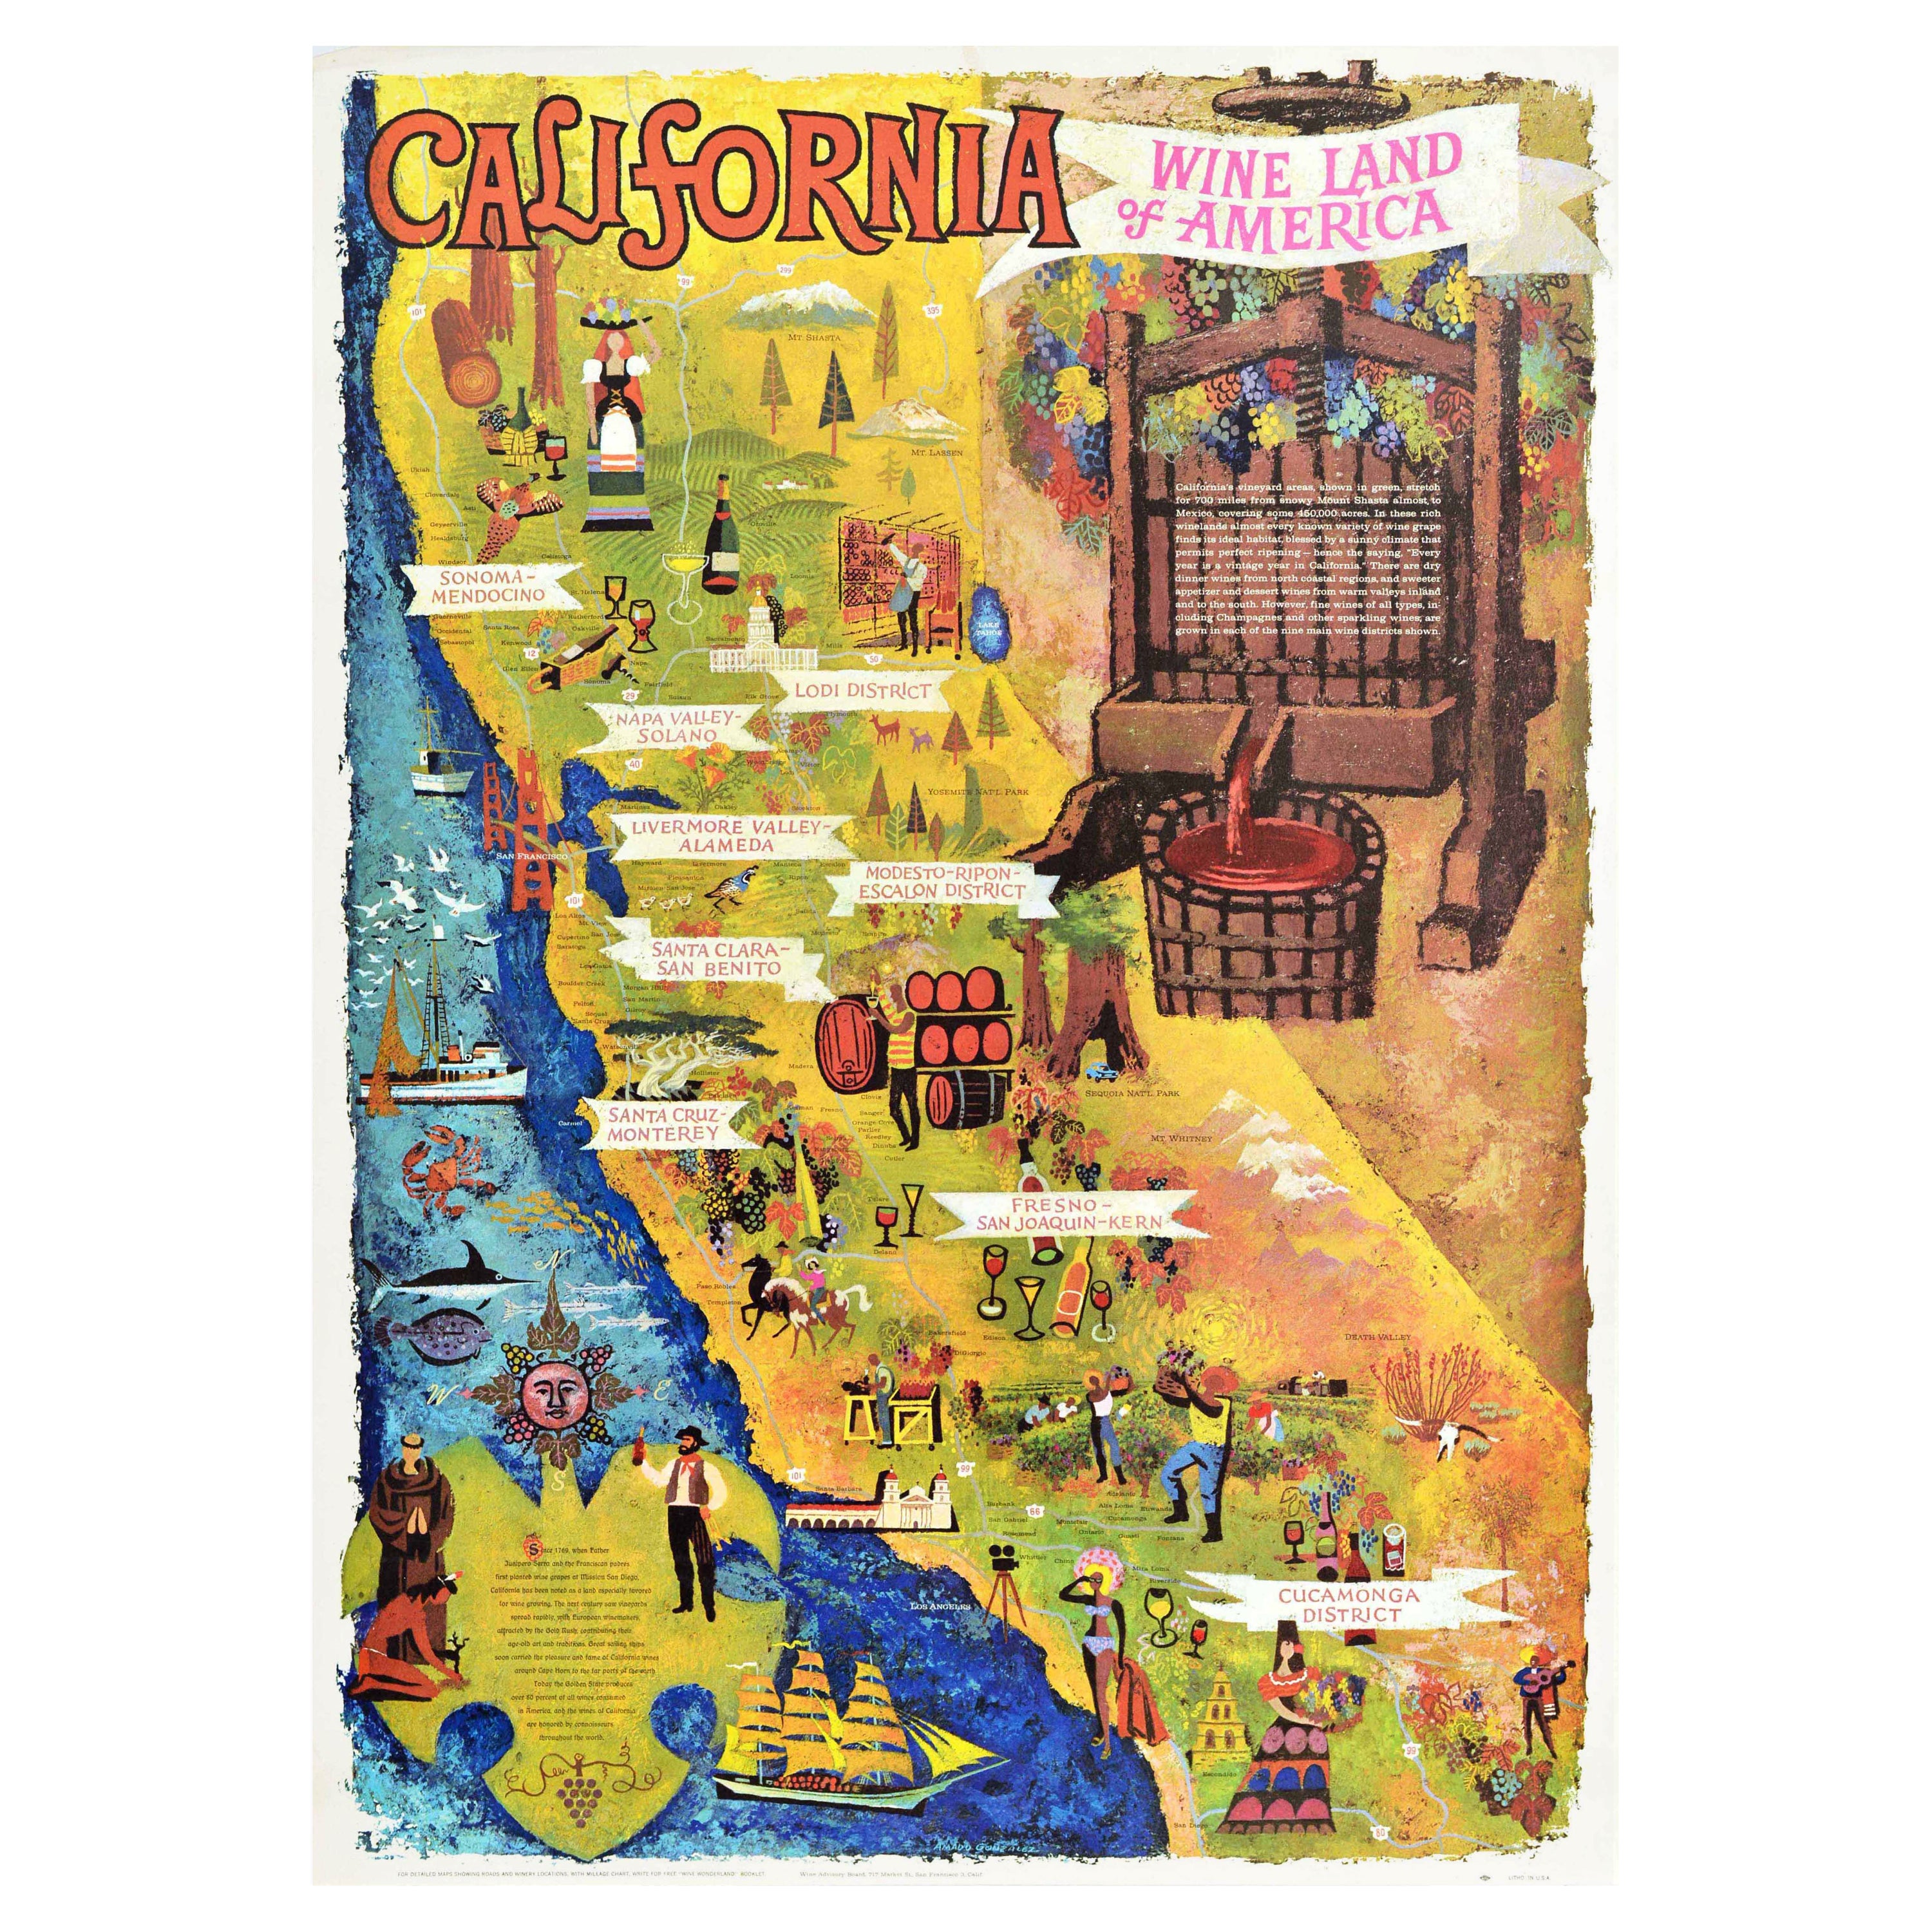 Original Vintage Travel Map Poster California Wine Land Of America Illustrations